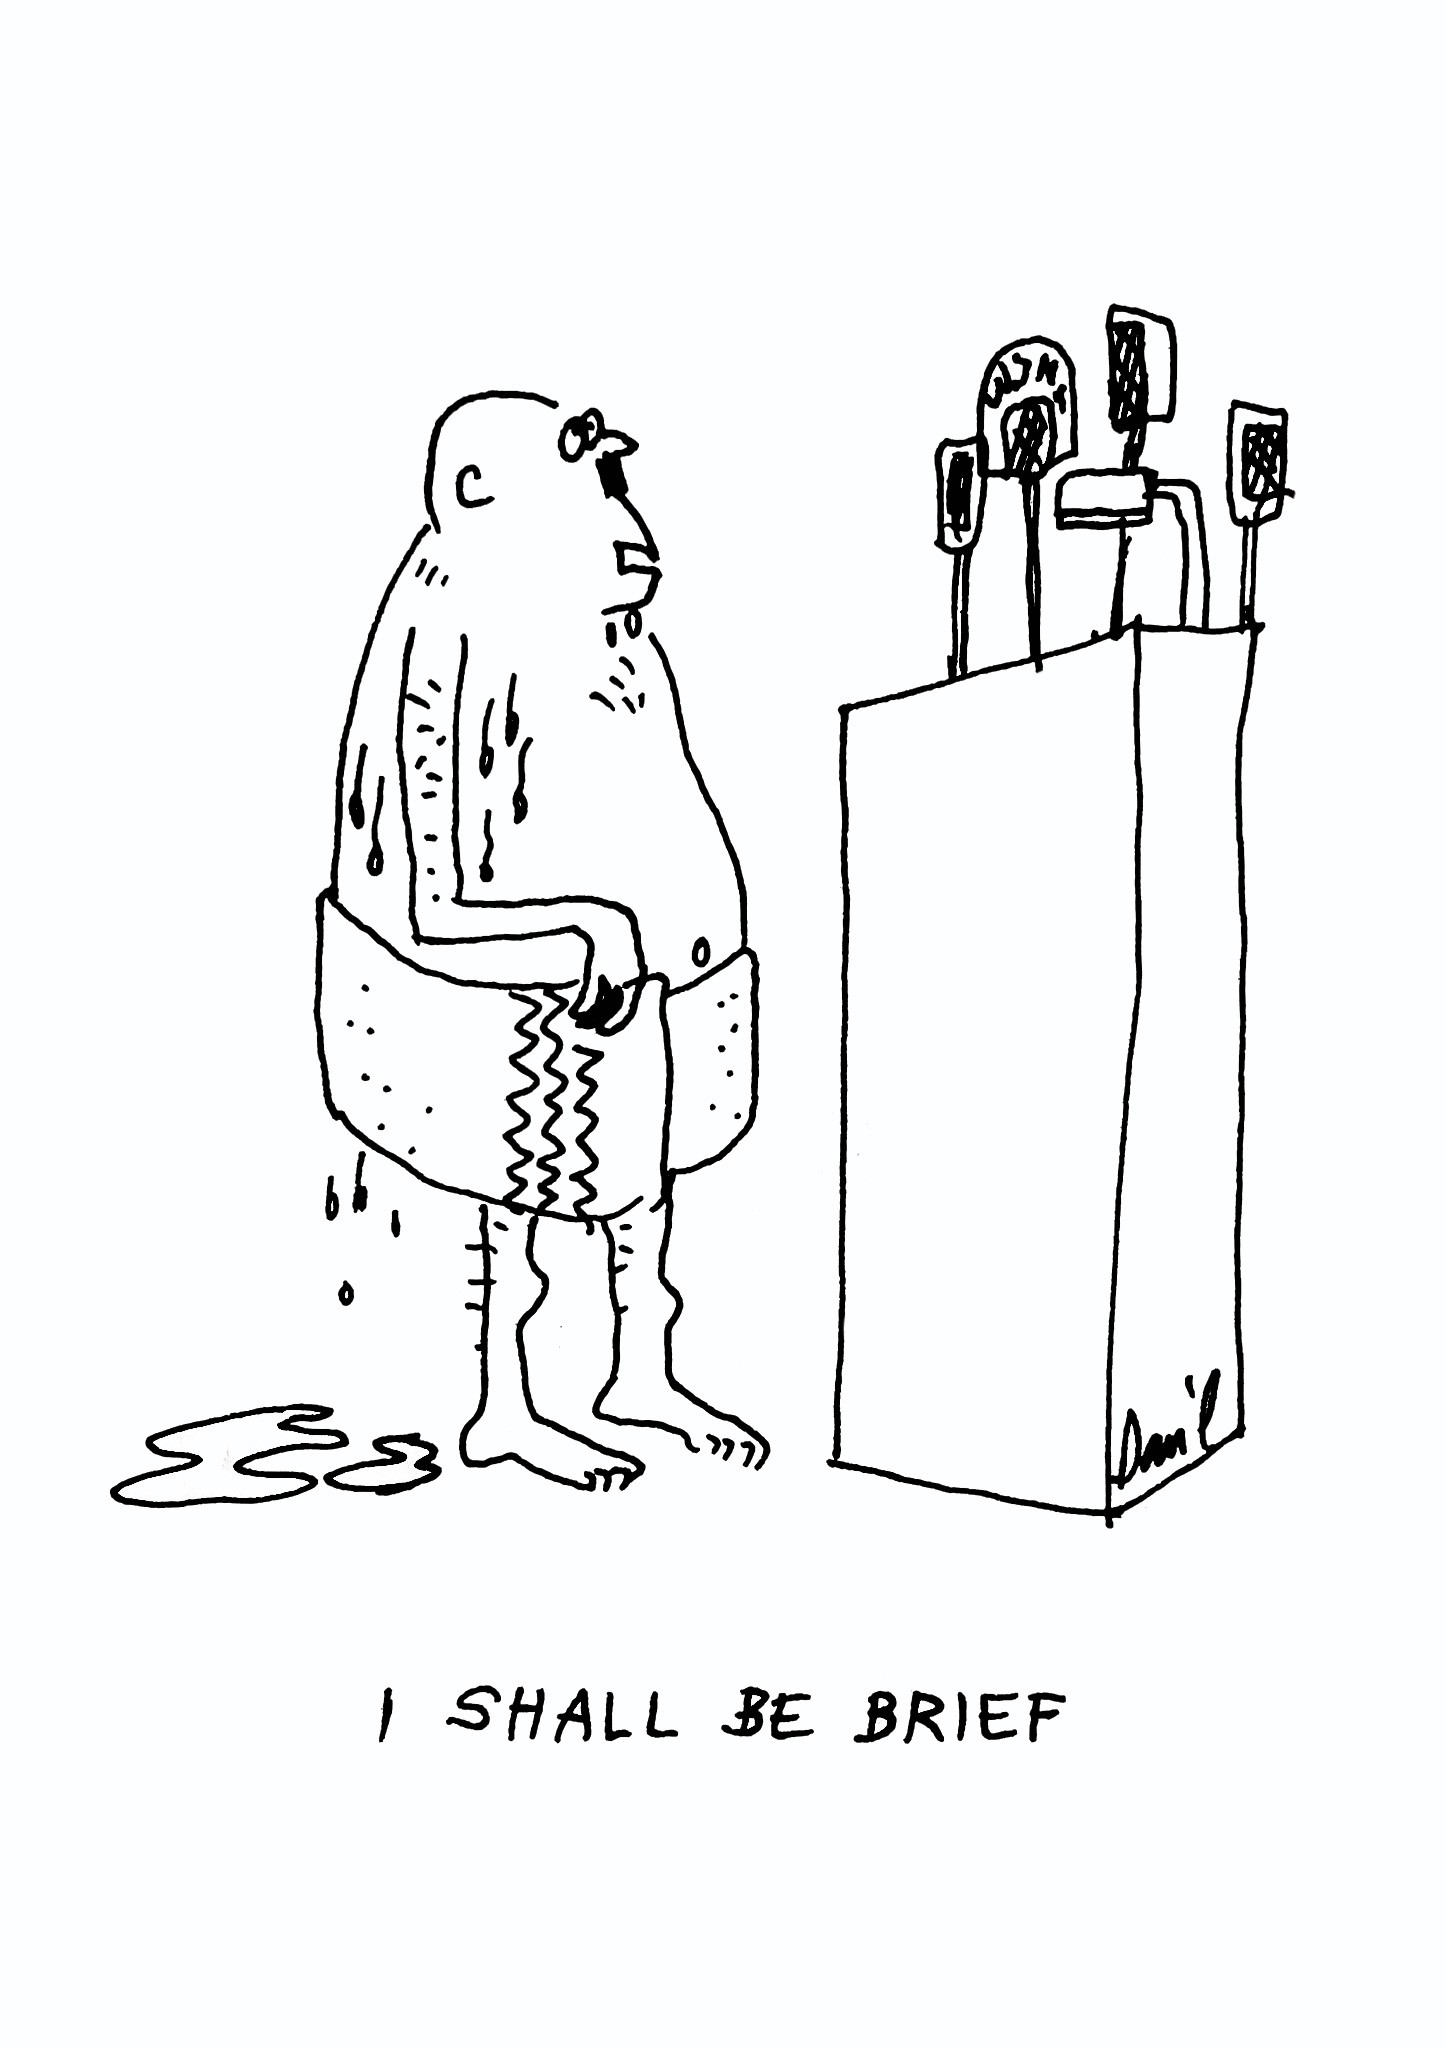 podium cartoon by Dan Rattiner